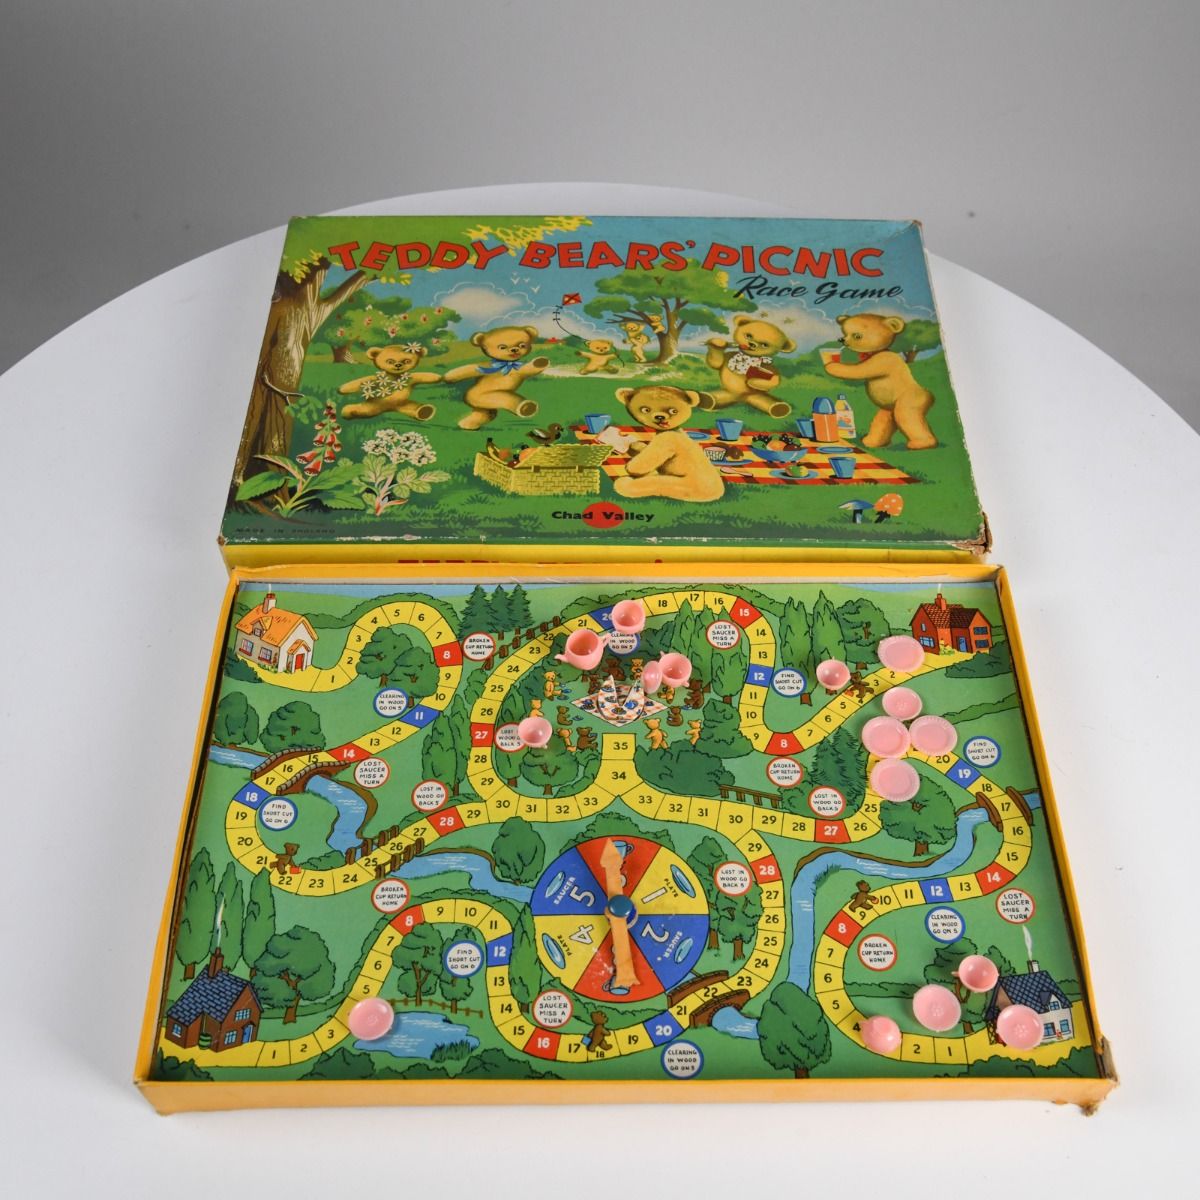 'Teddy Bear's Picnic Race Game' 1960s Board Game